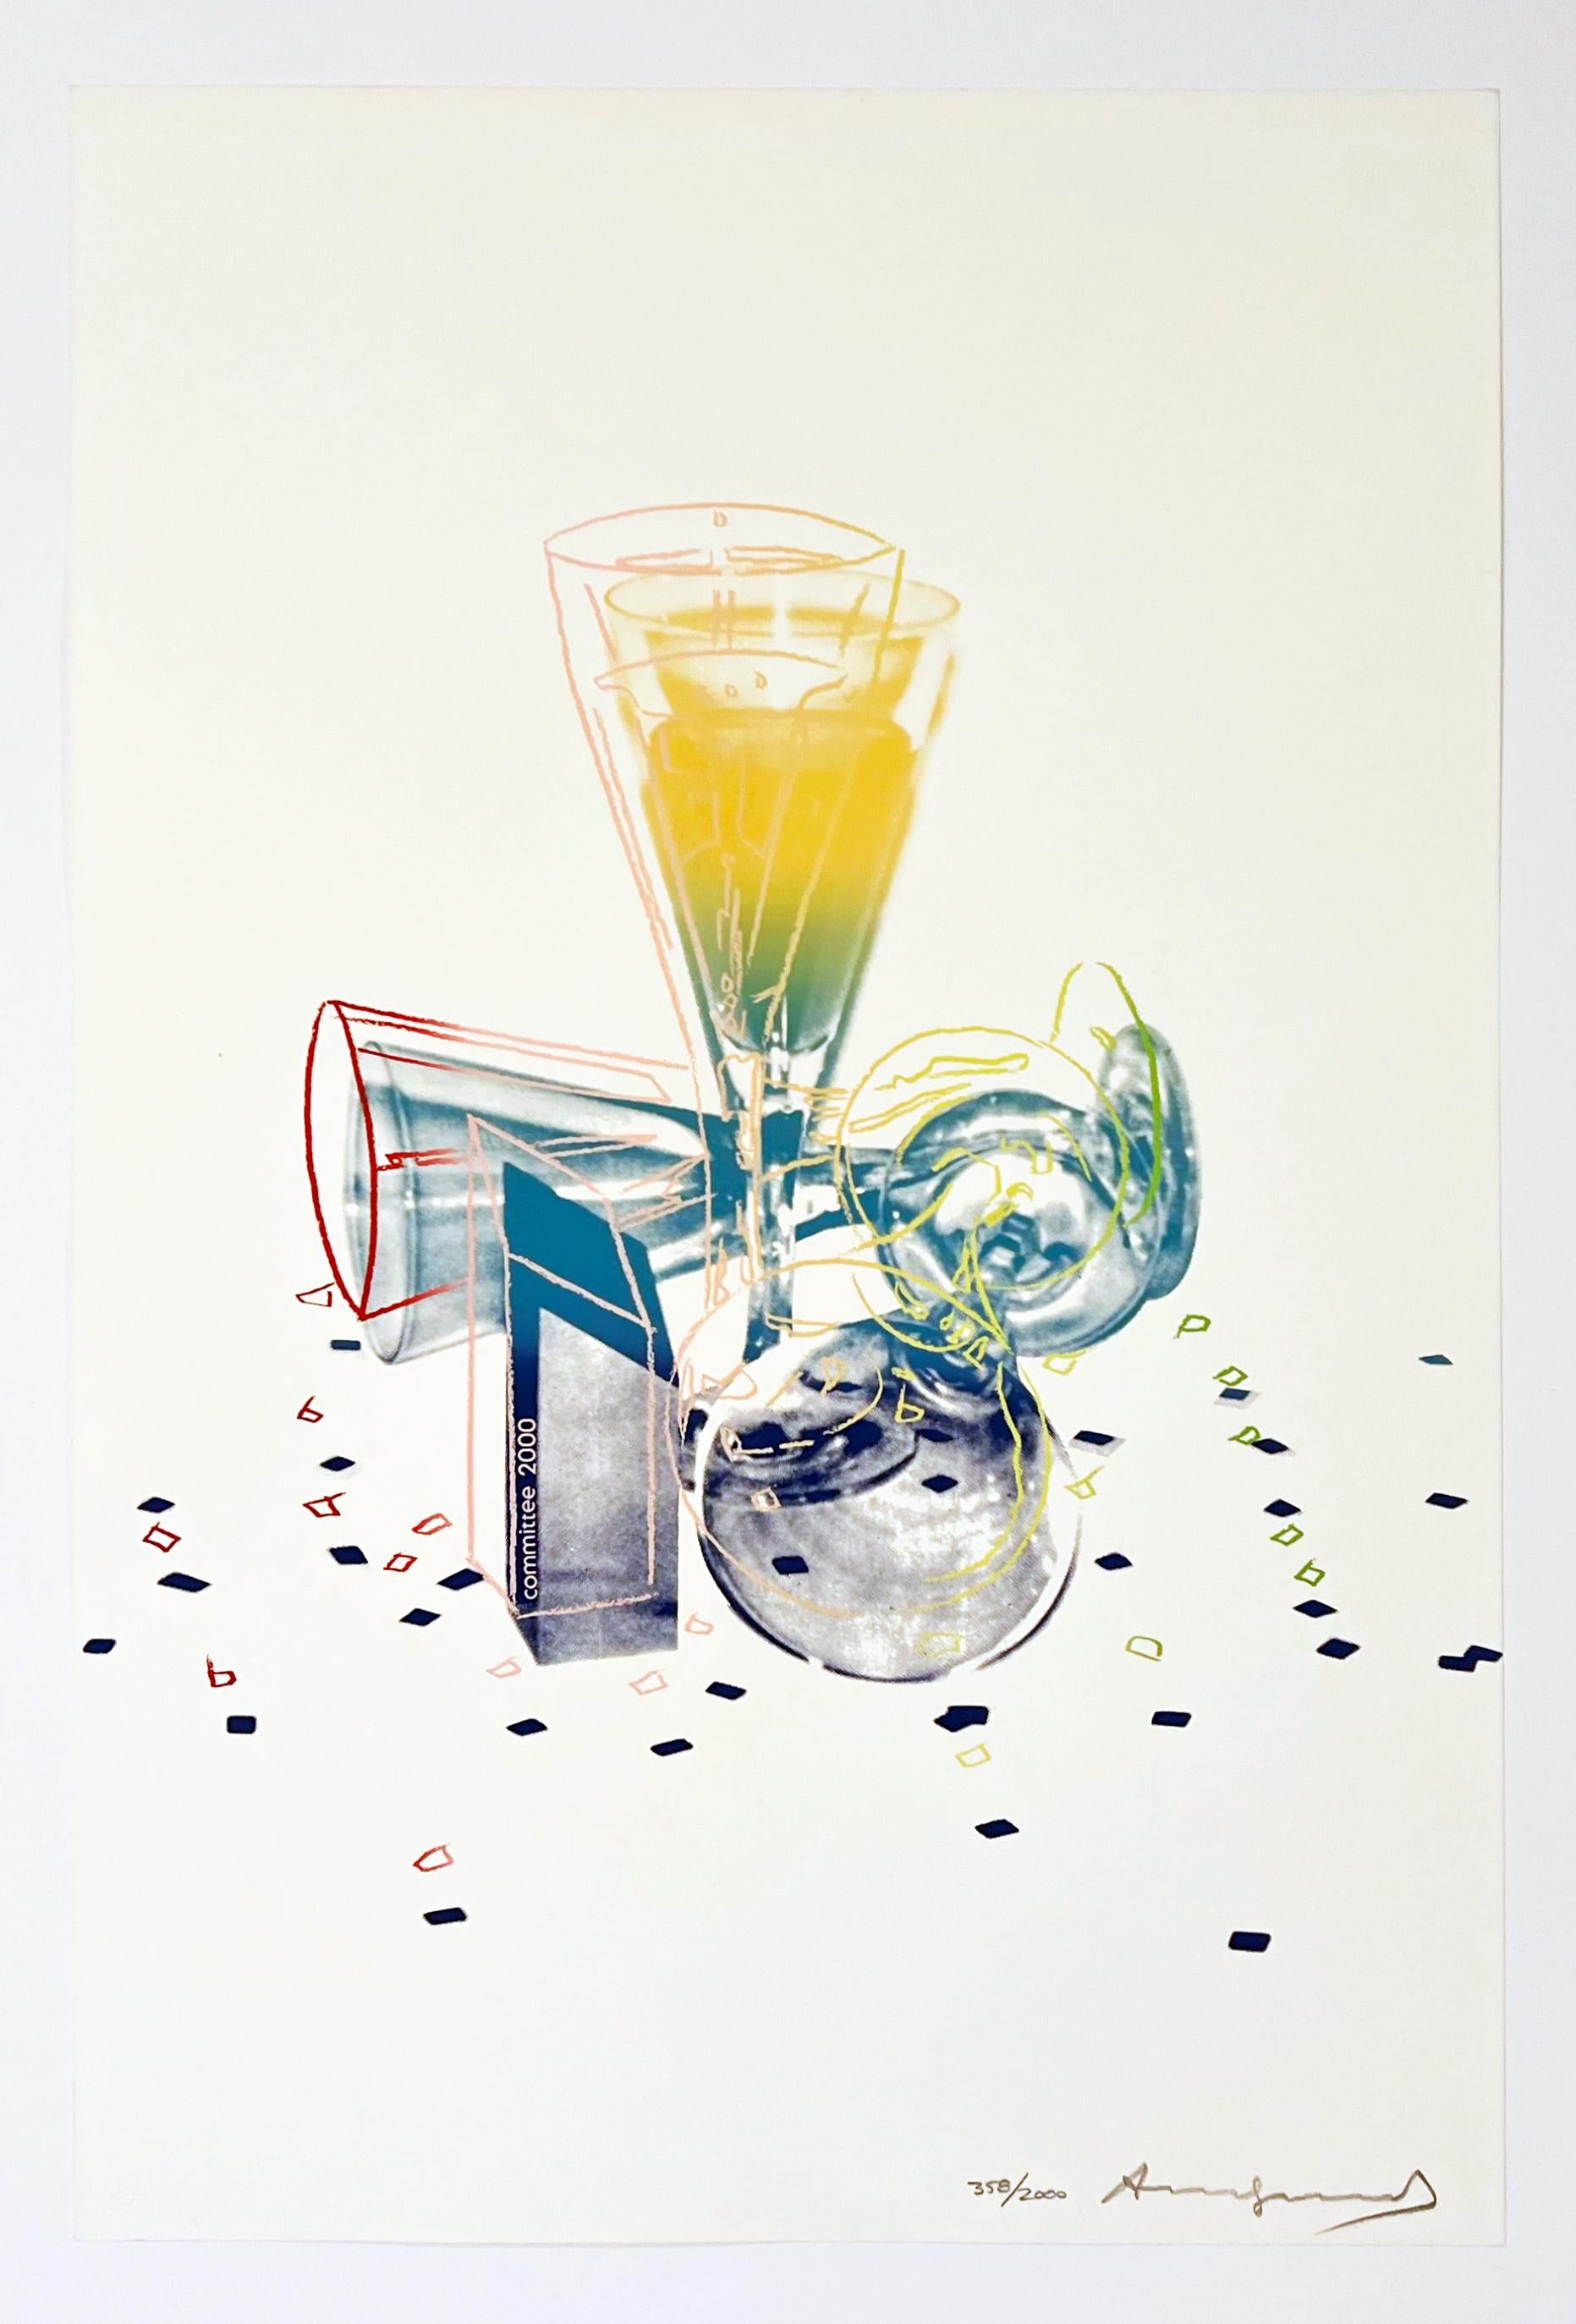 Committee 2000 - Pop Art Print by Andy Warhol